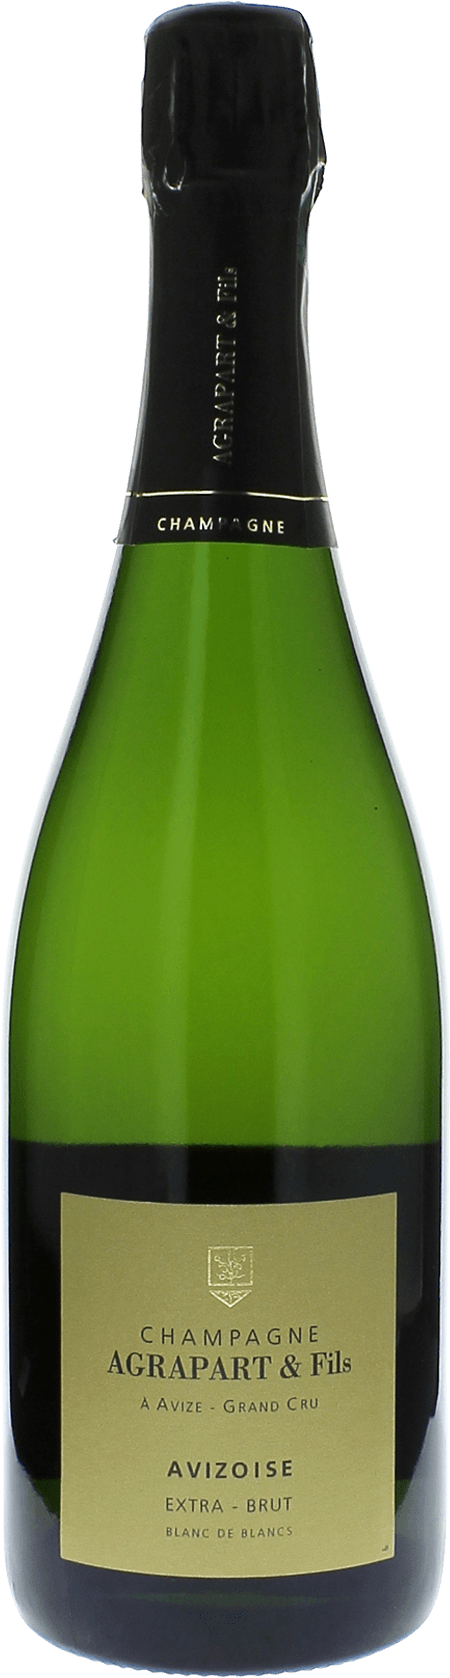 Agrapart  avizoise extra brut blanc de blancs grand cru 2014  Pascal Agrapart, Champagne